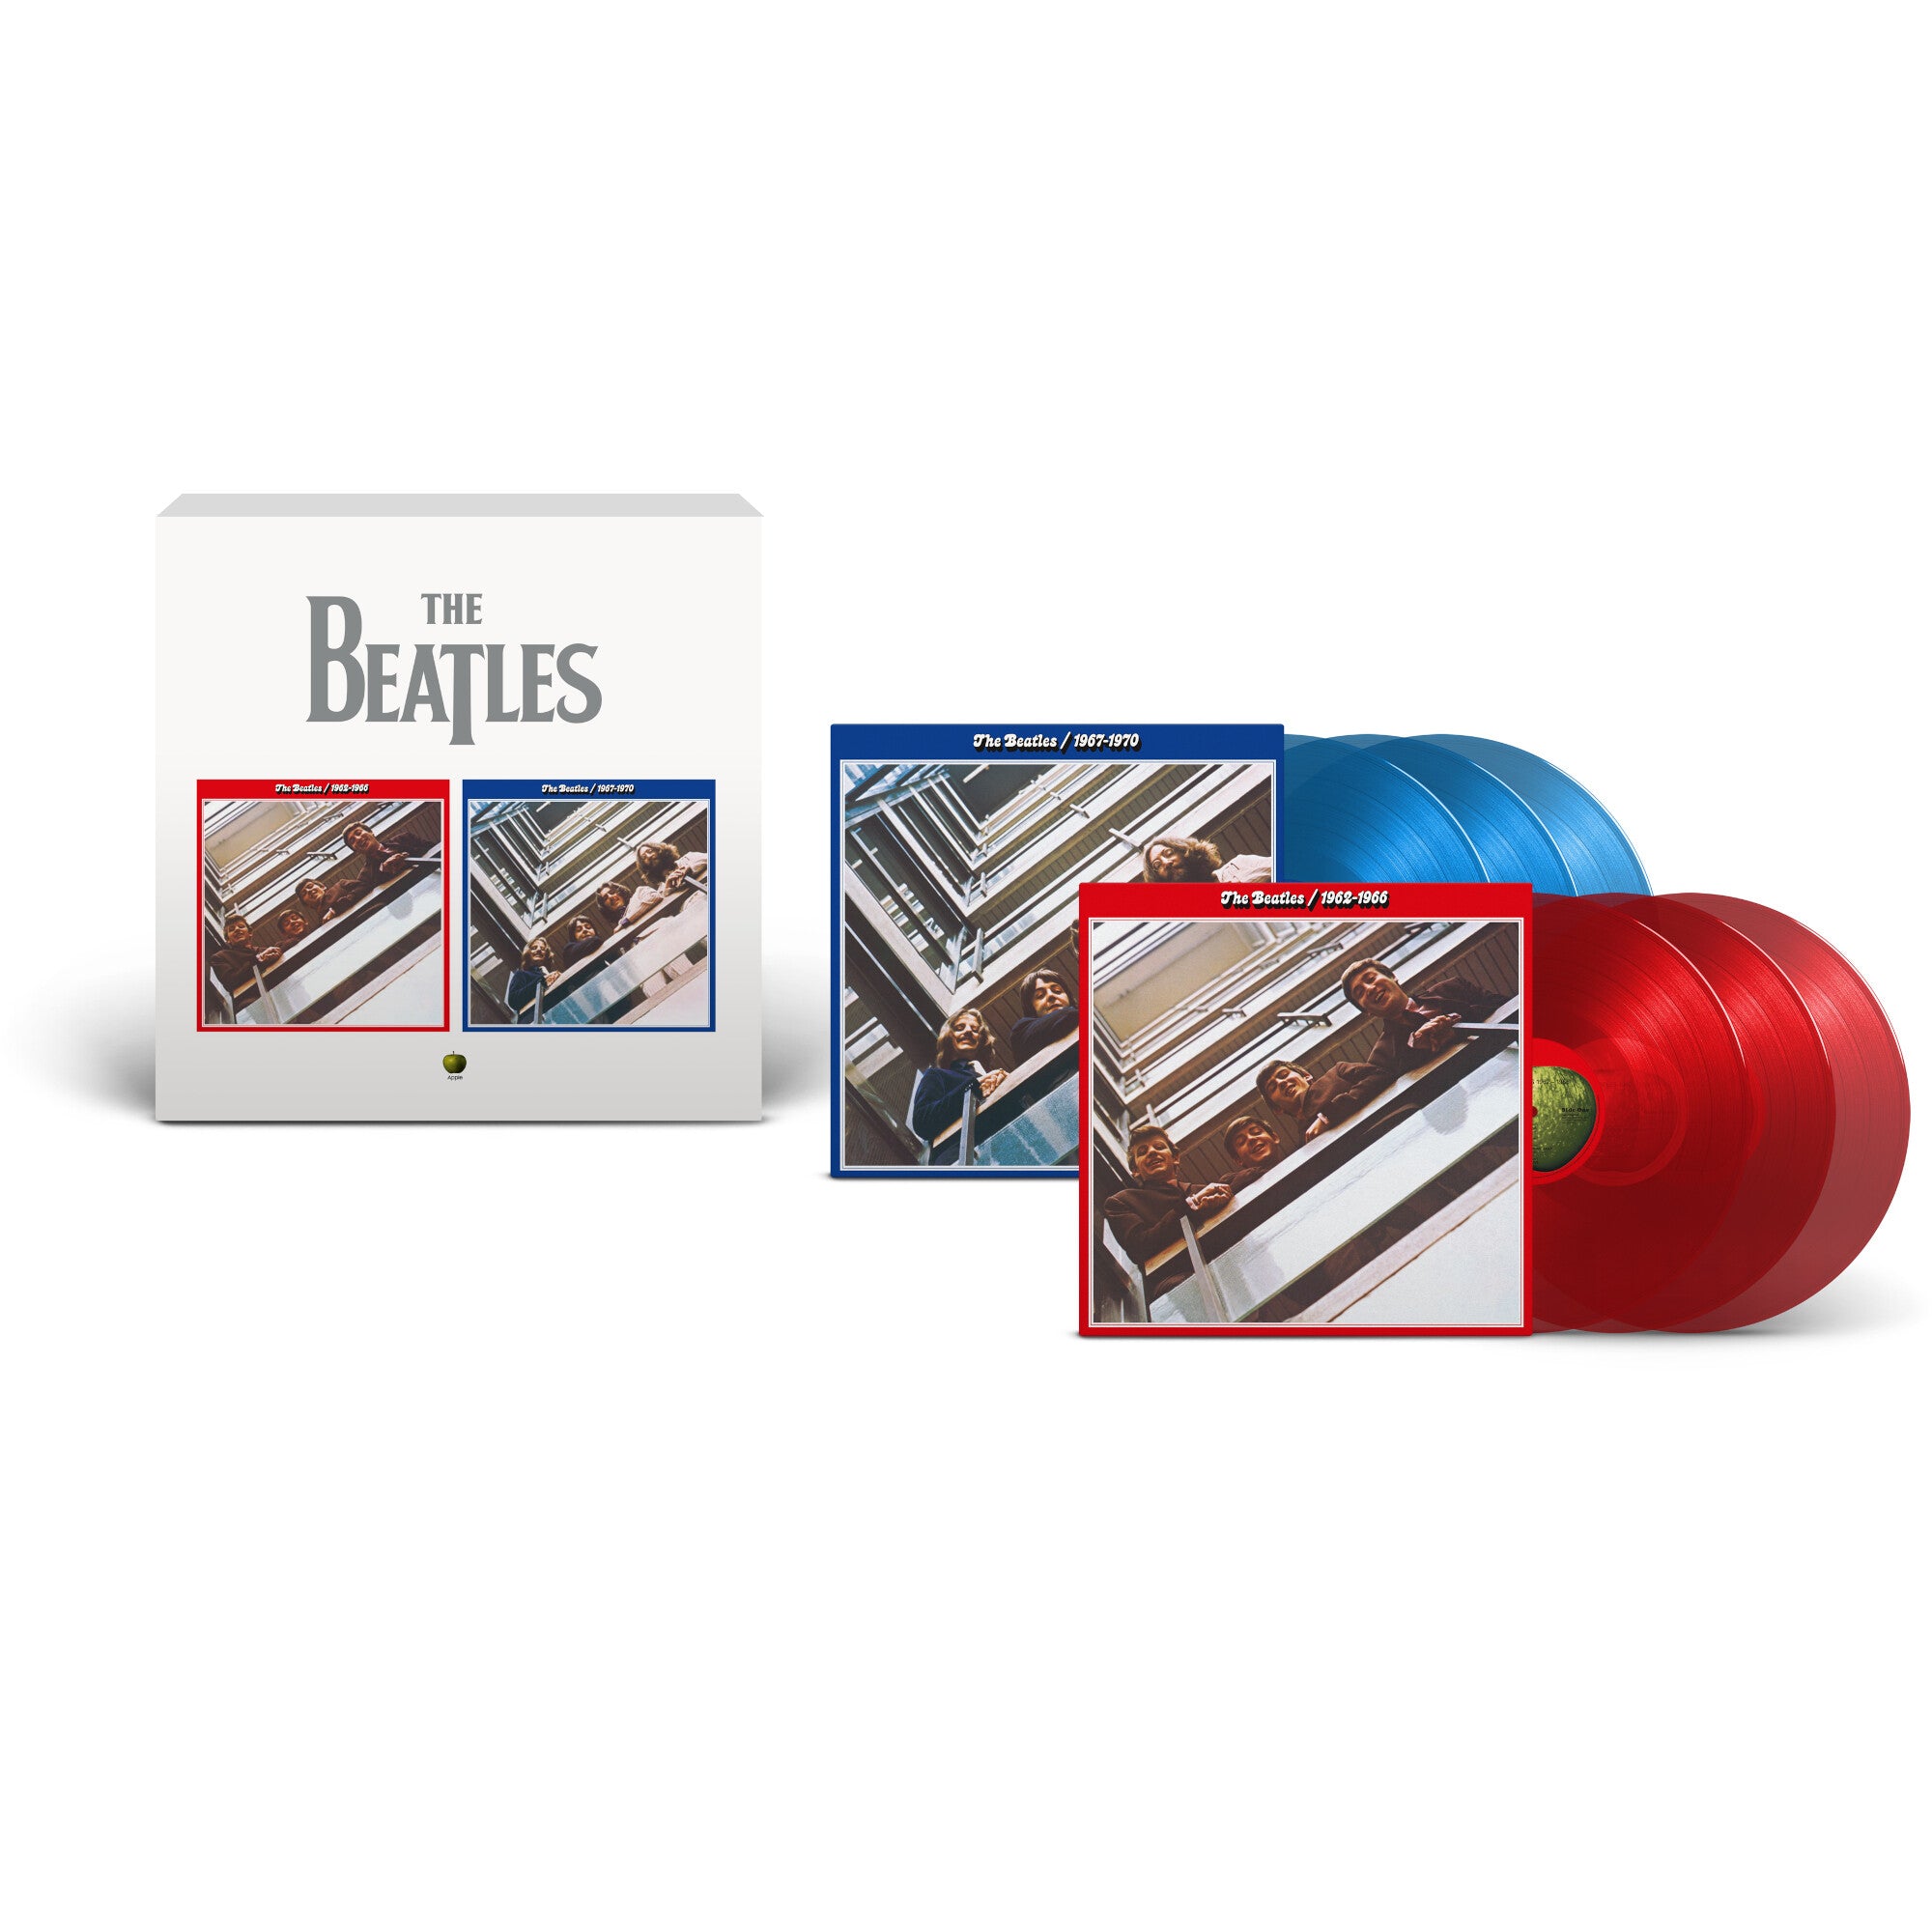 https://images.bravado.de/prod/product-assets/product-asset-data/beatles-the/the-beatles-domestic/products/505679/web/413384/image-thumb__413384__3000x3000_original/The-Beatles-The-Beatles-1962-1966-2023-Edition-The-Beatles-1967-1970-2023-Edition-Vinyl-Bundle-zu-bundeln-505679-413384.jpg